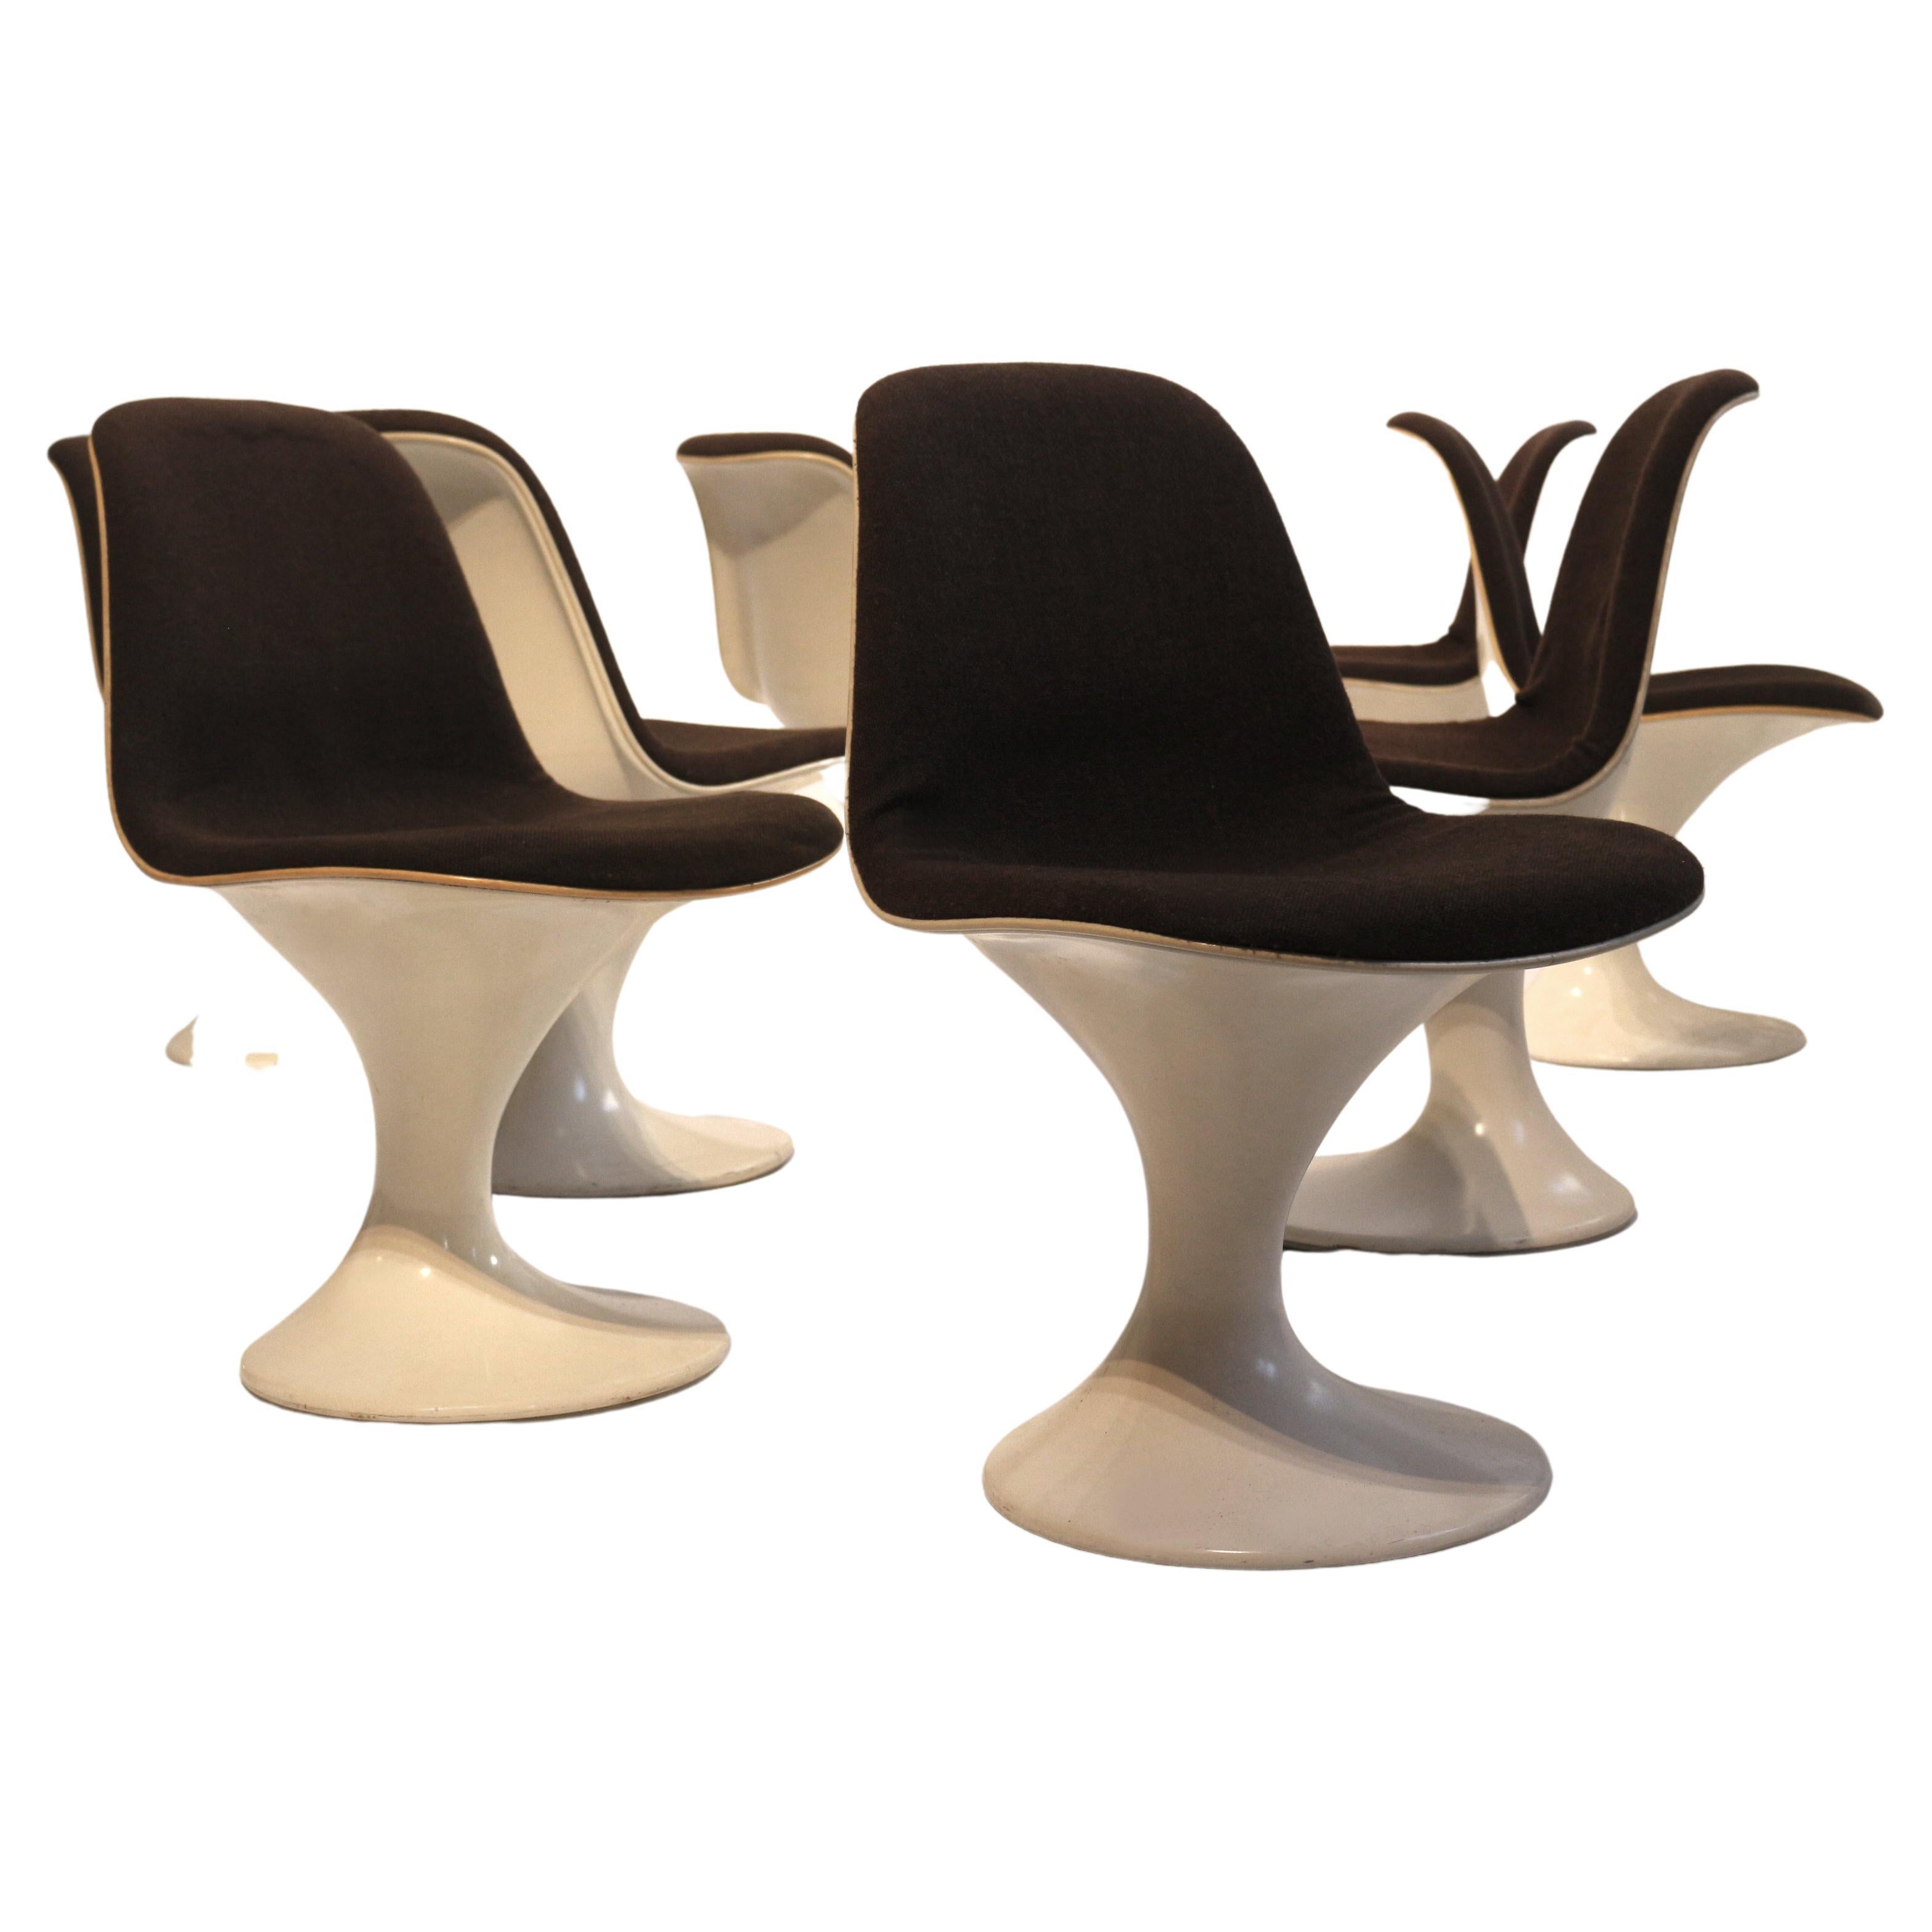 Set 8 Orbit Chairs, Herman Miller 